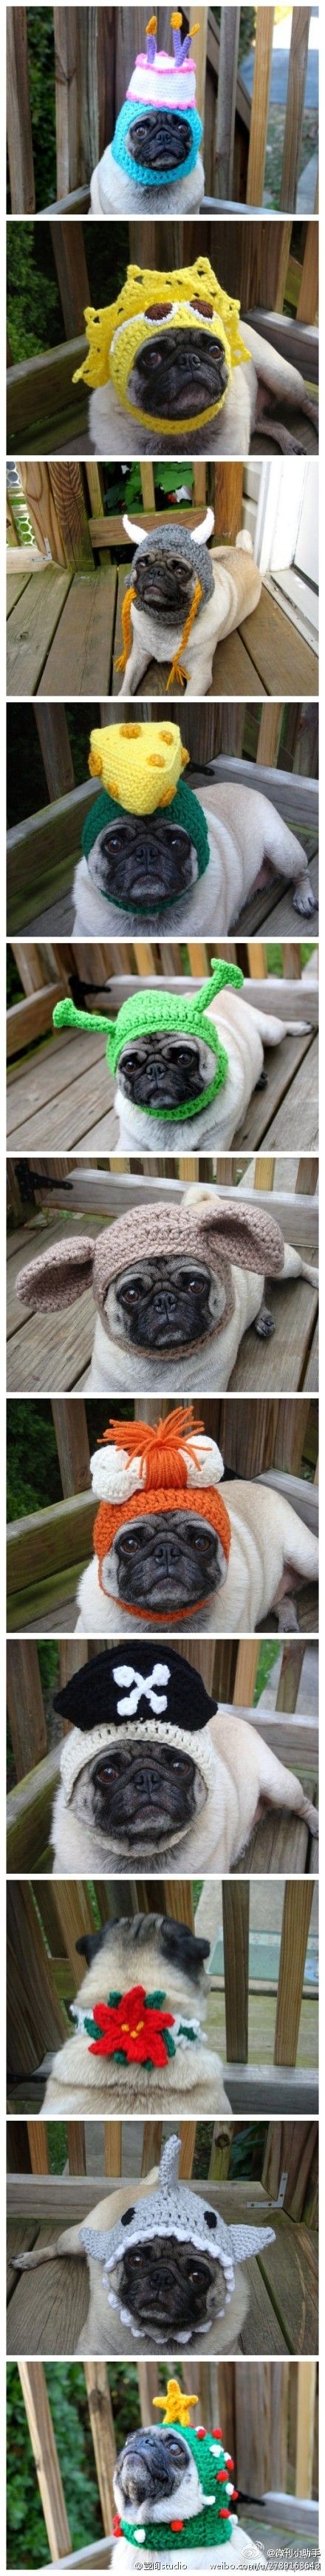 A pug of many hats